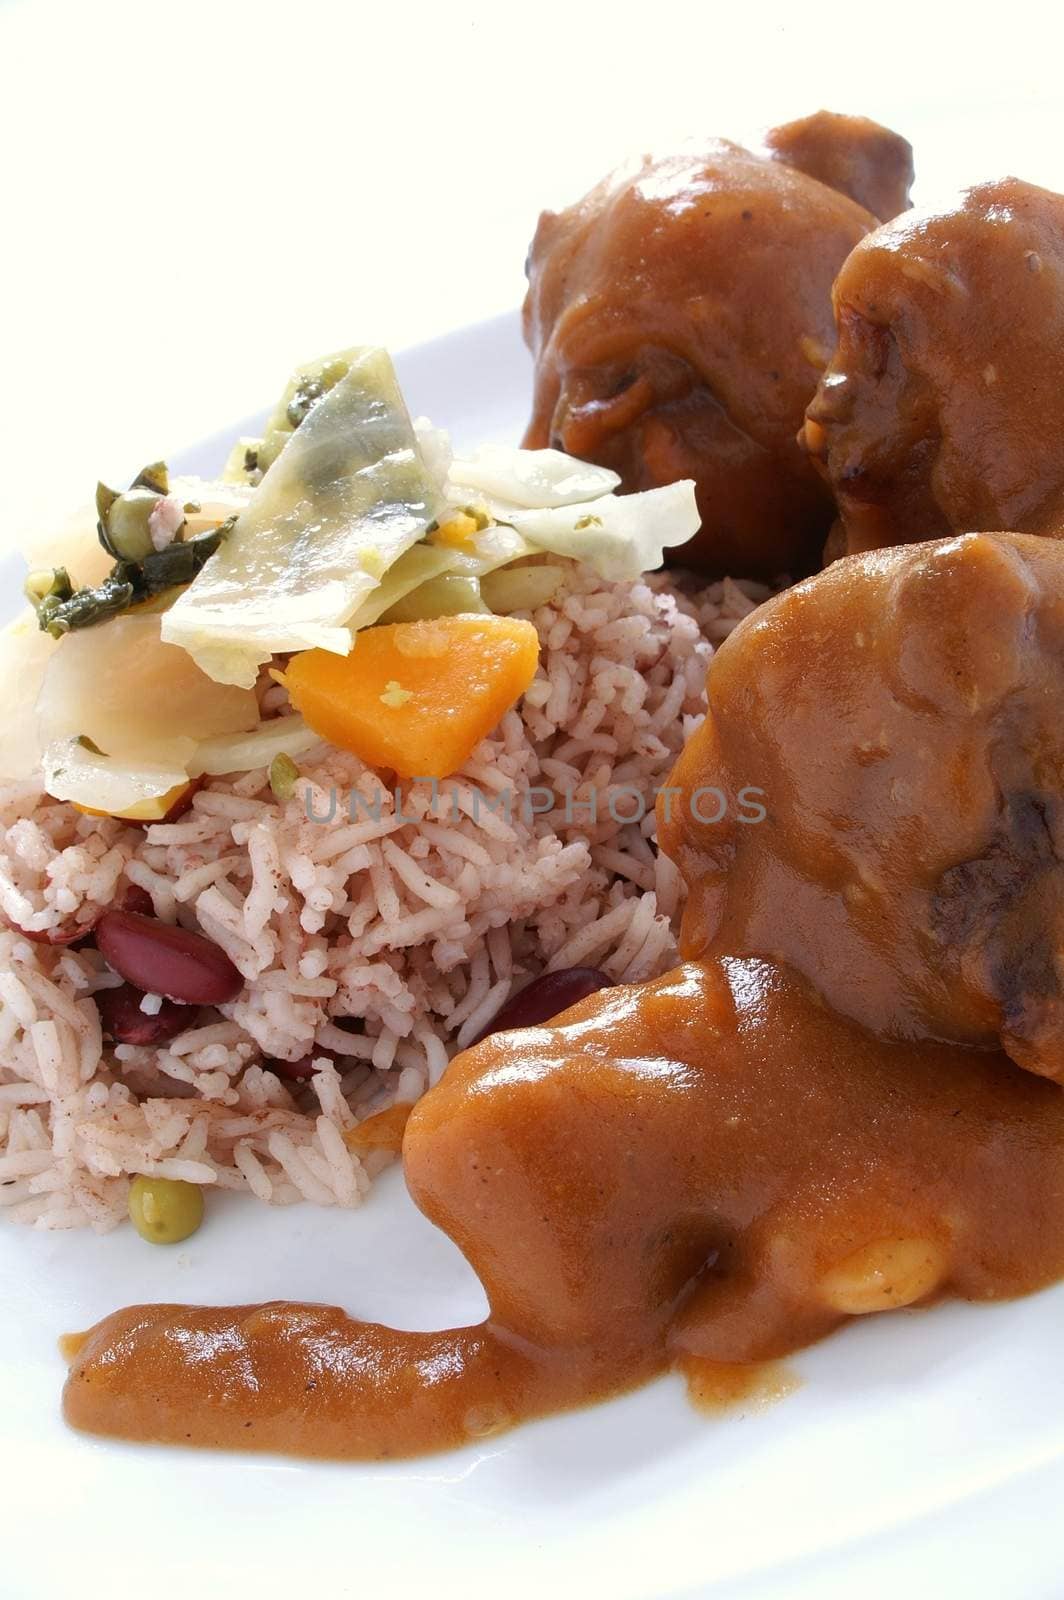 Afro Caribbean food by neil_langan